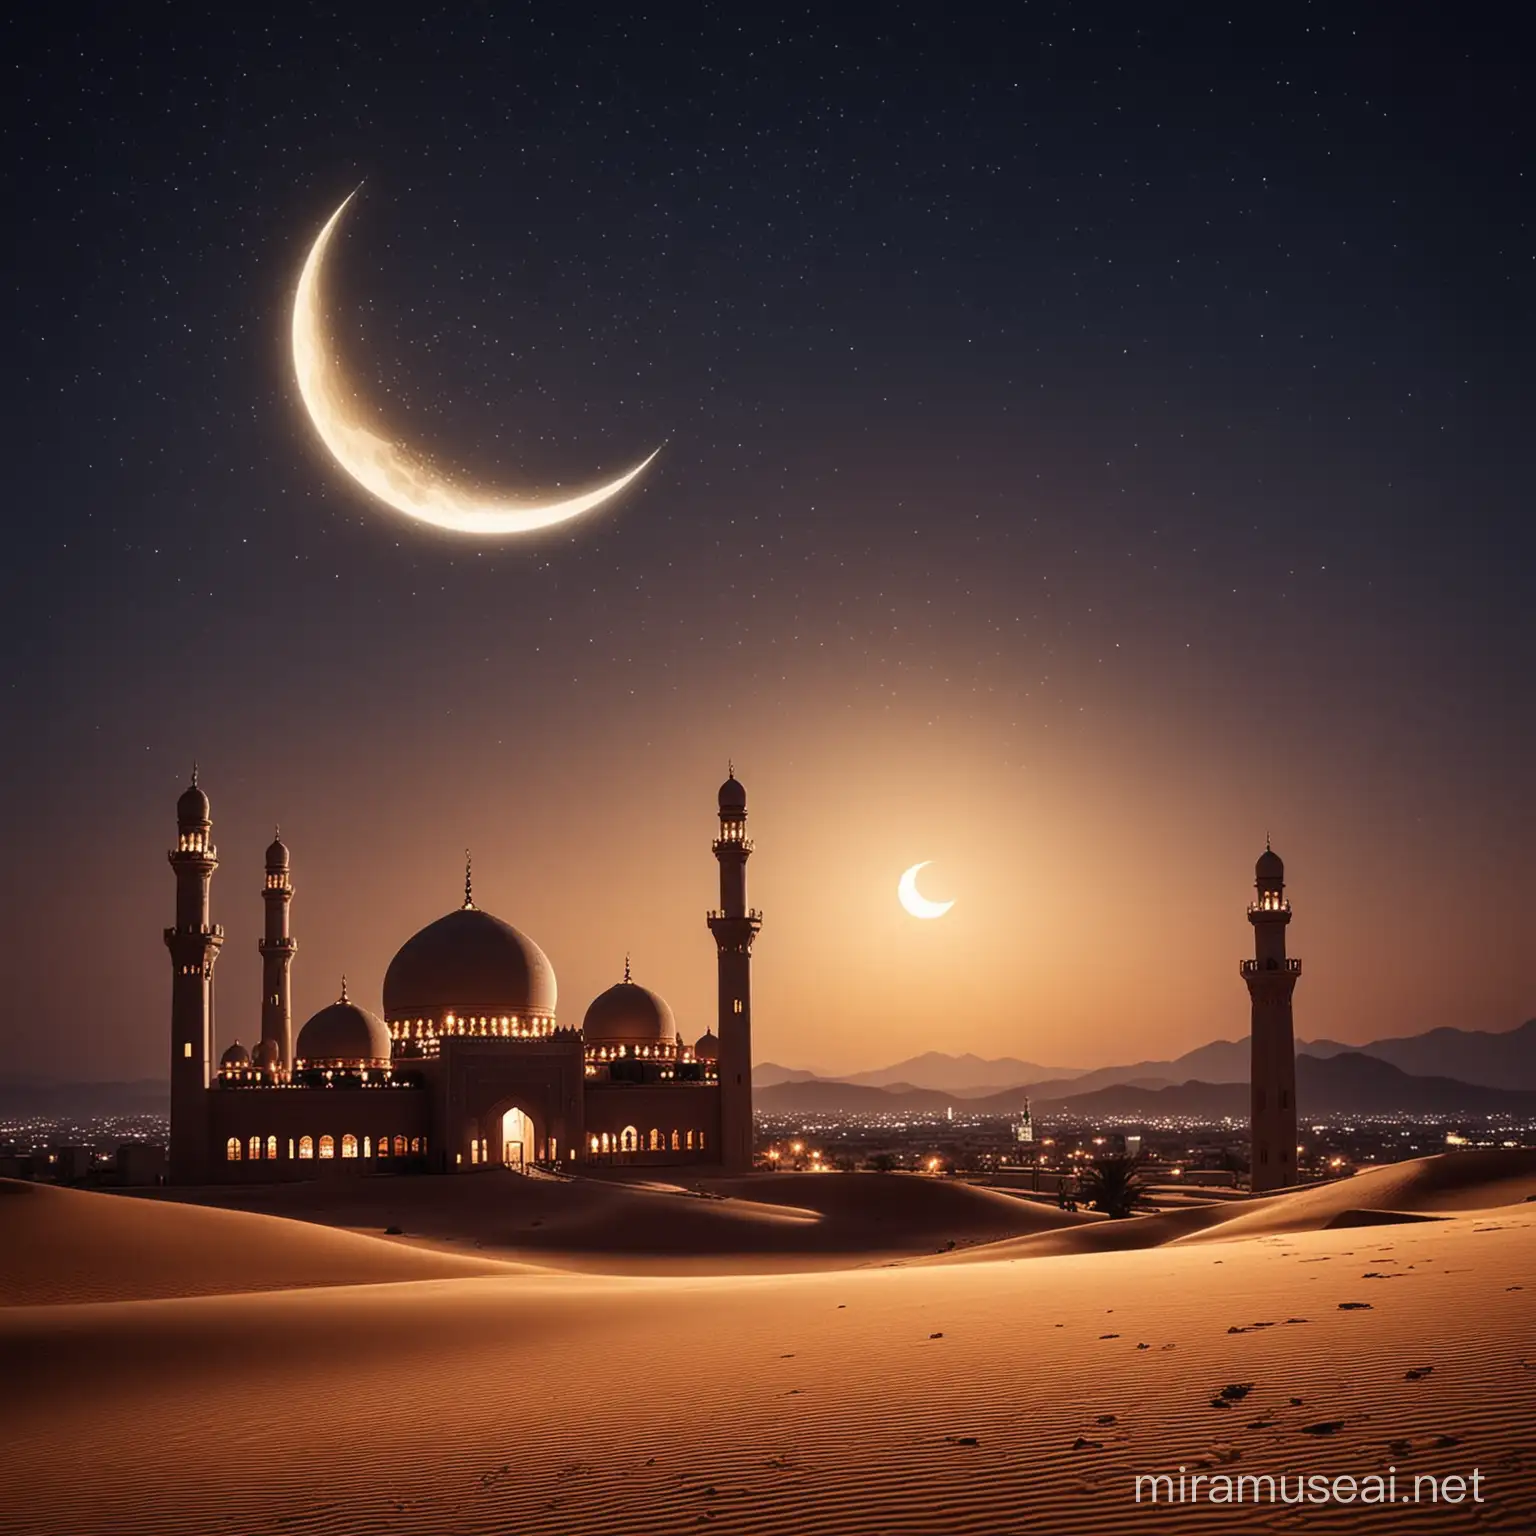 Eid Mubarak Mosque Illuminated by Crescent Moon in Desert Night